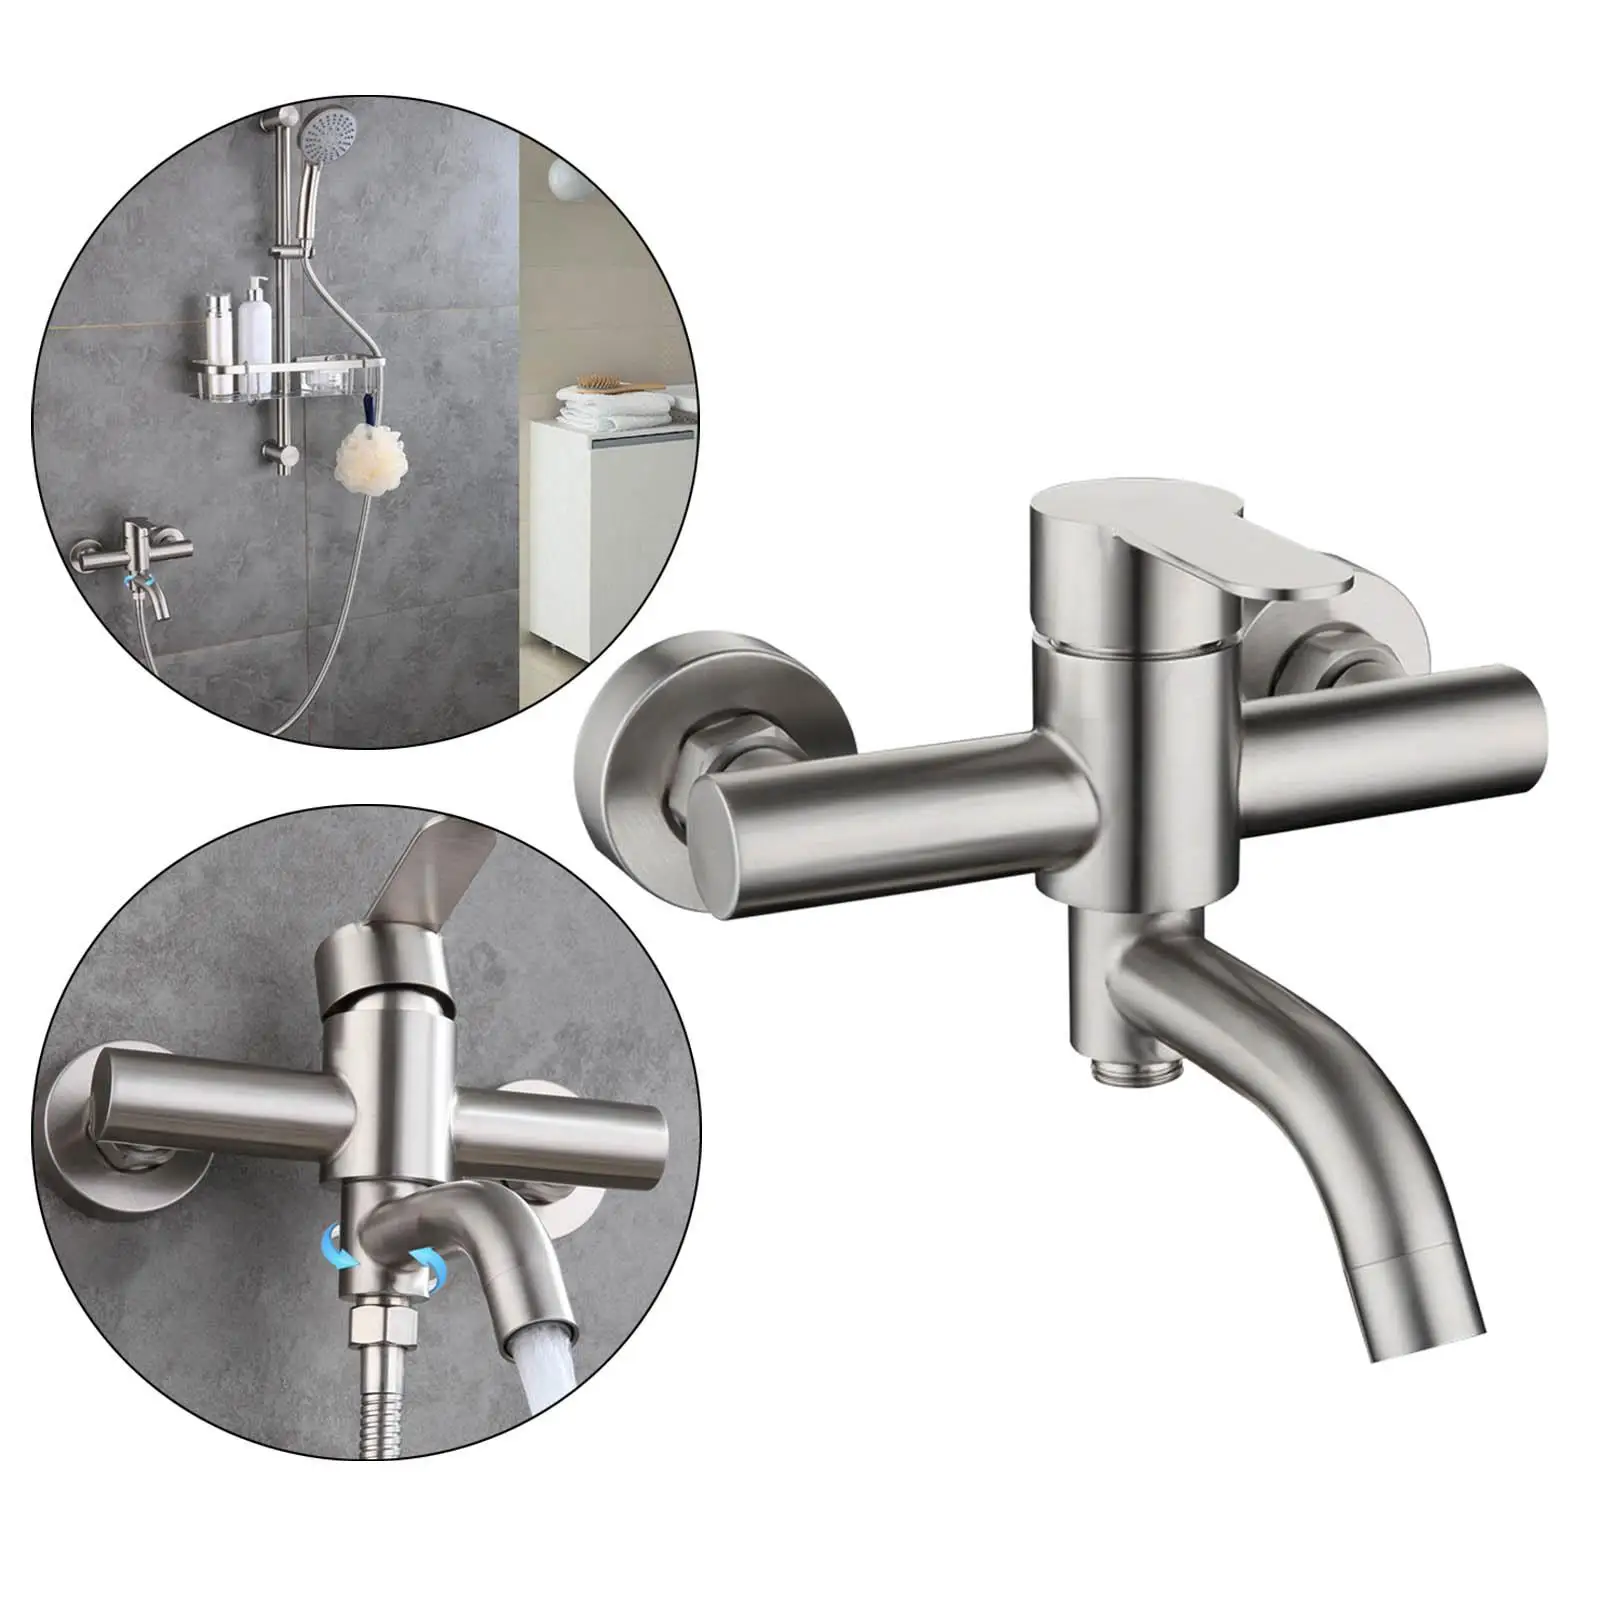 Stainless Steel Shower Mixer Faucet Bathroom Fixtures Bath Tub Mixing Valve